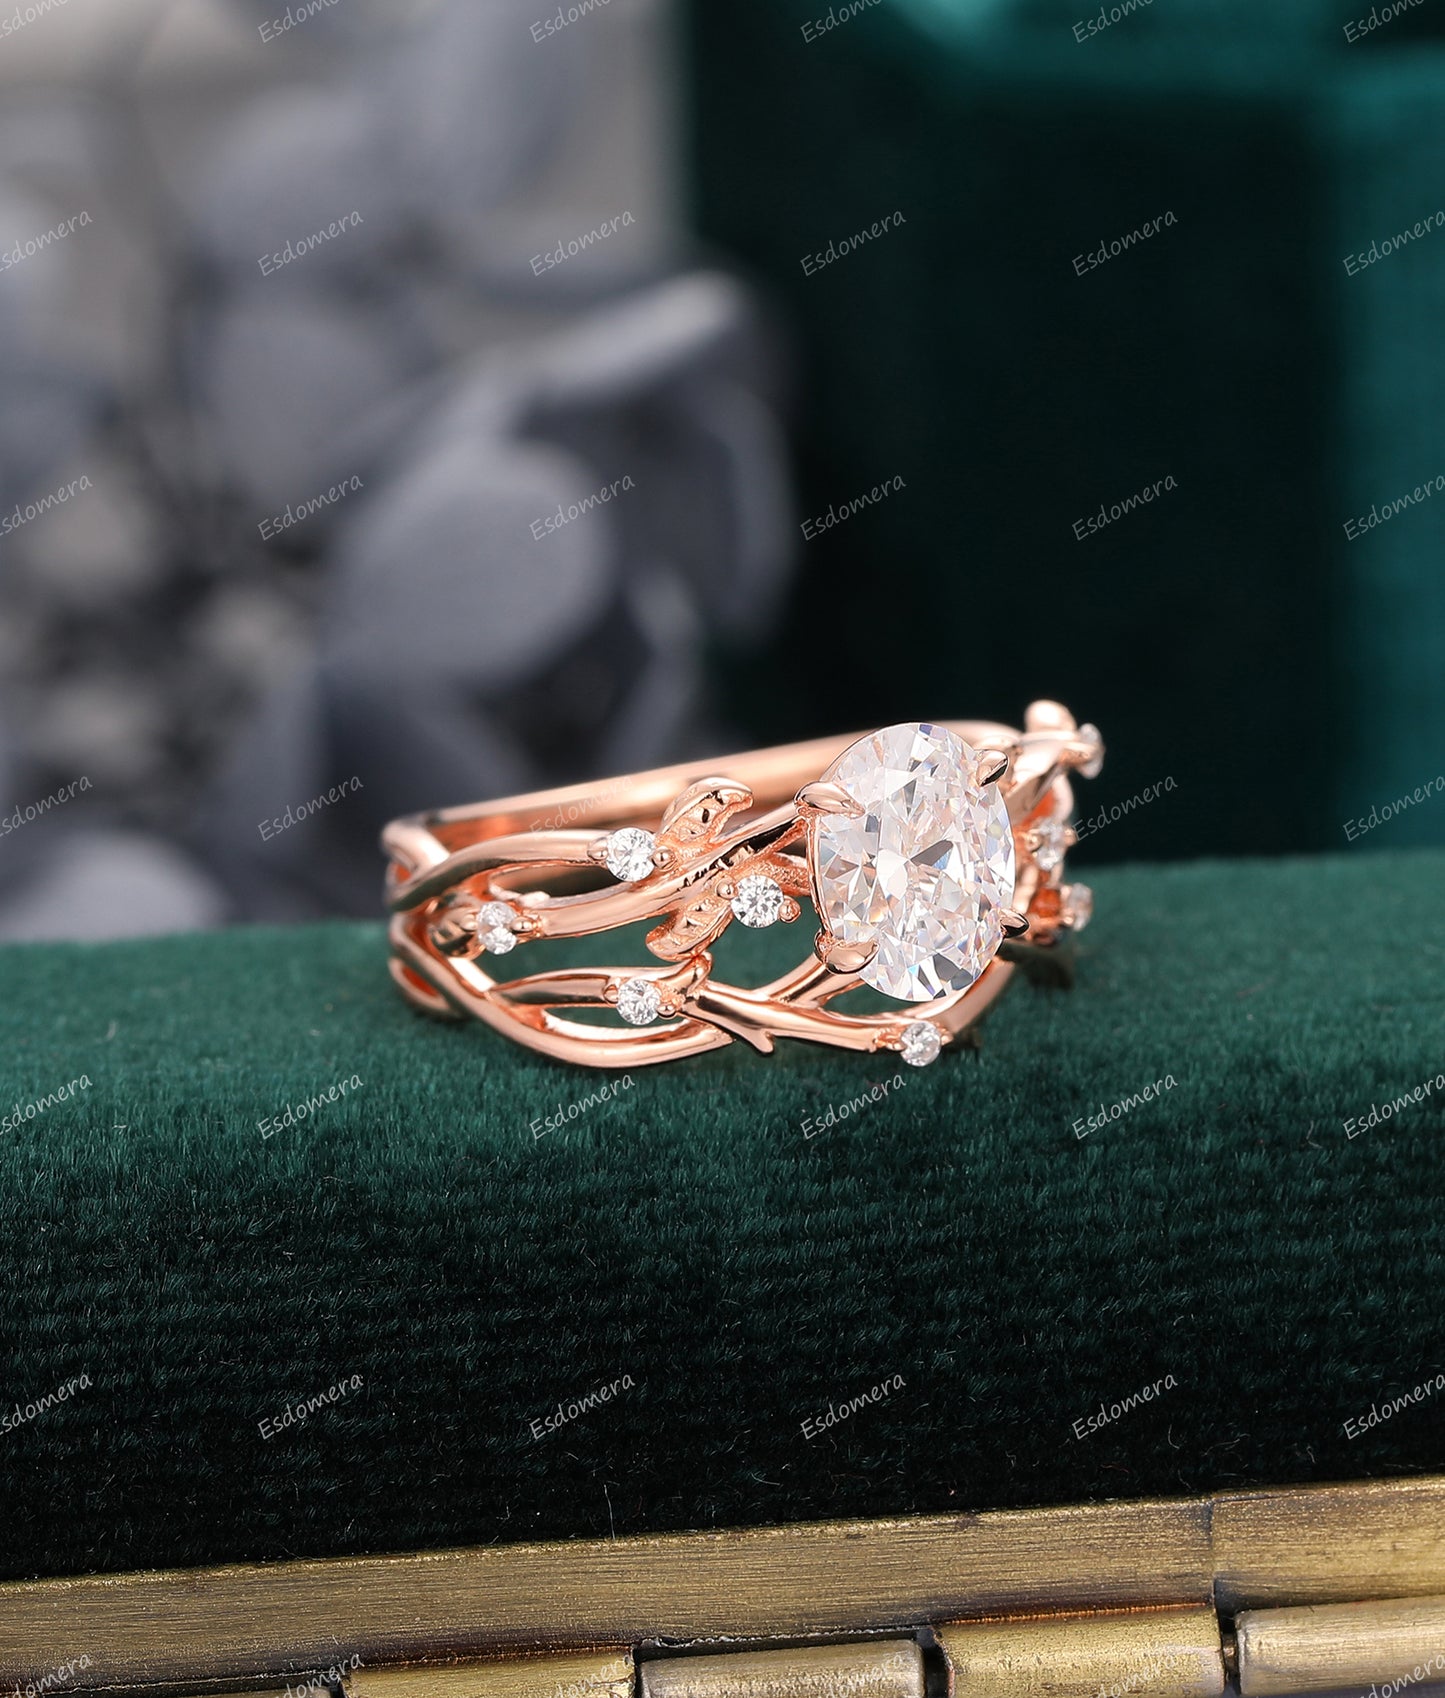 Leaf Moissanite Bridal Set, Oval Moissanite 1.5CT Wedding Ring, Dainty Stacking Ring, Art Deco Engagement Ring Set